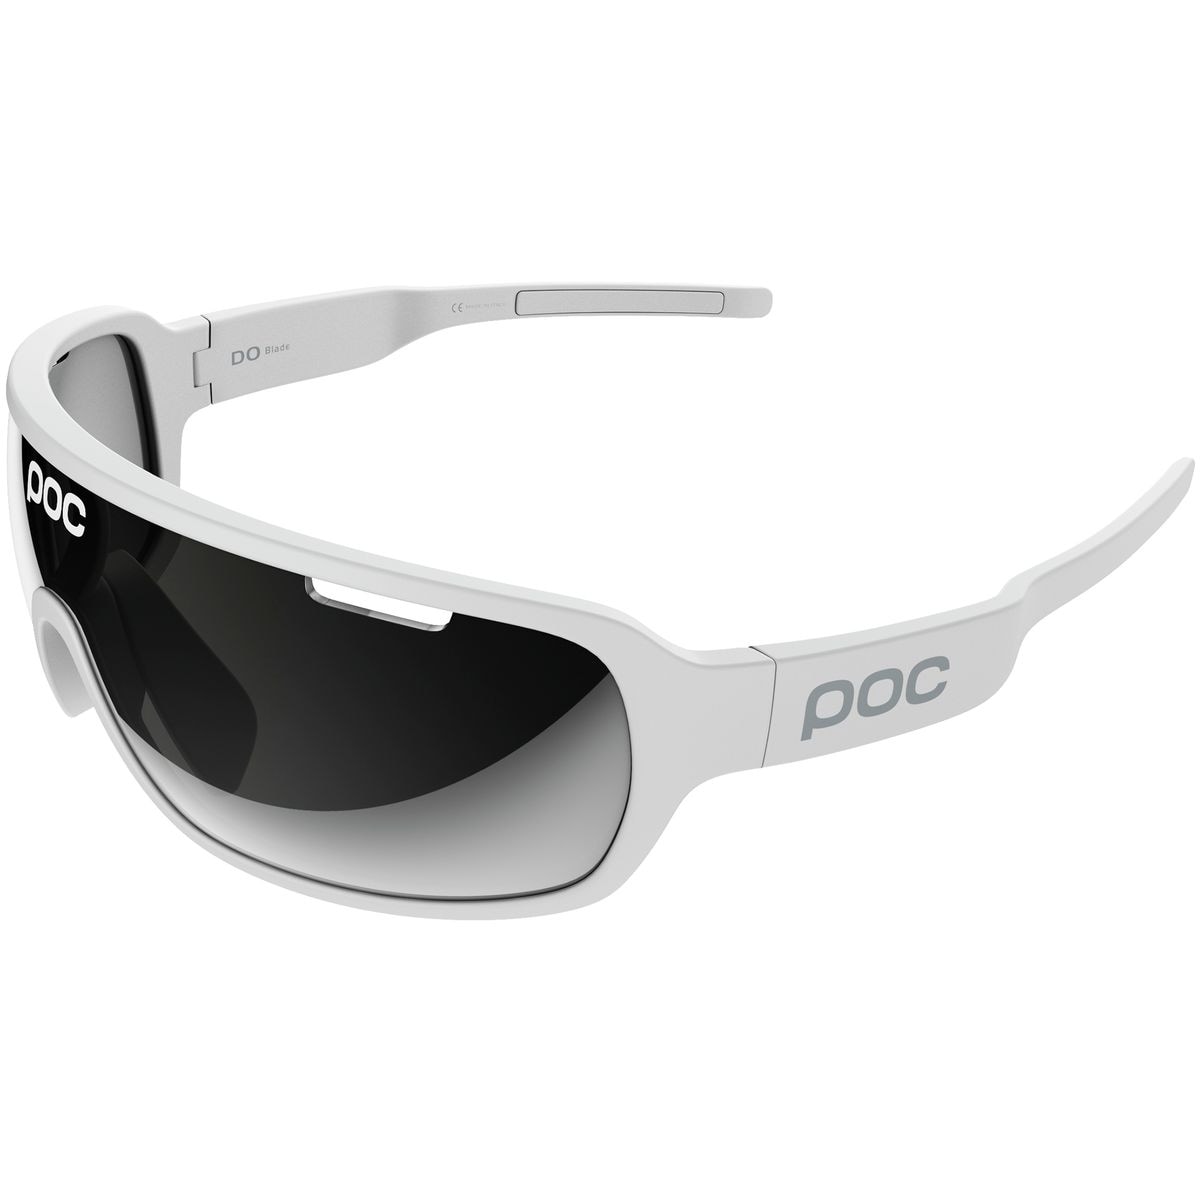 POC Do Blade Raceday Sunglasses - Men's